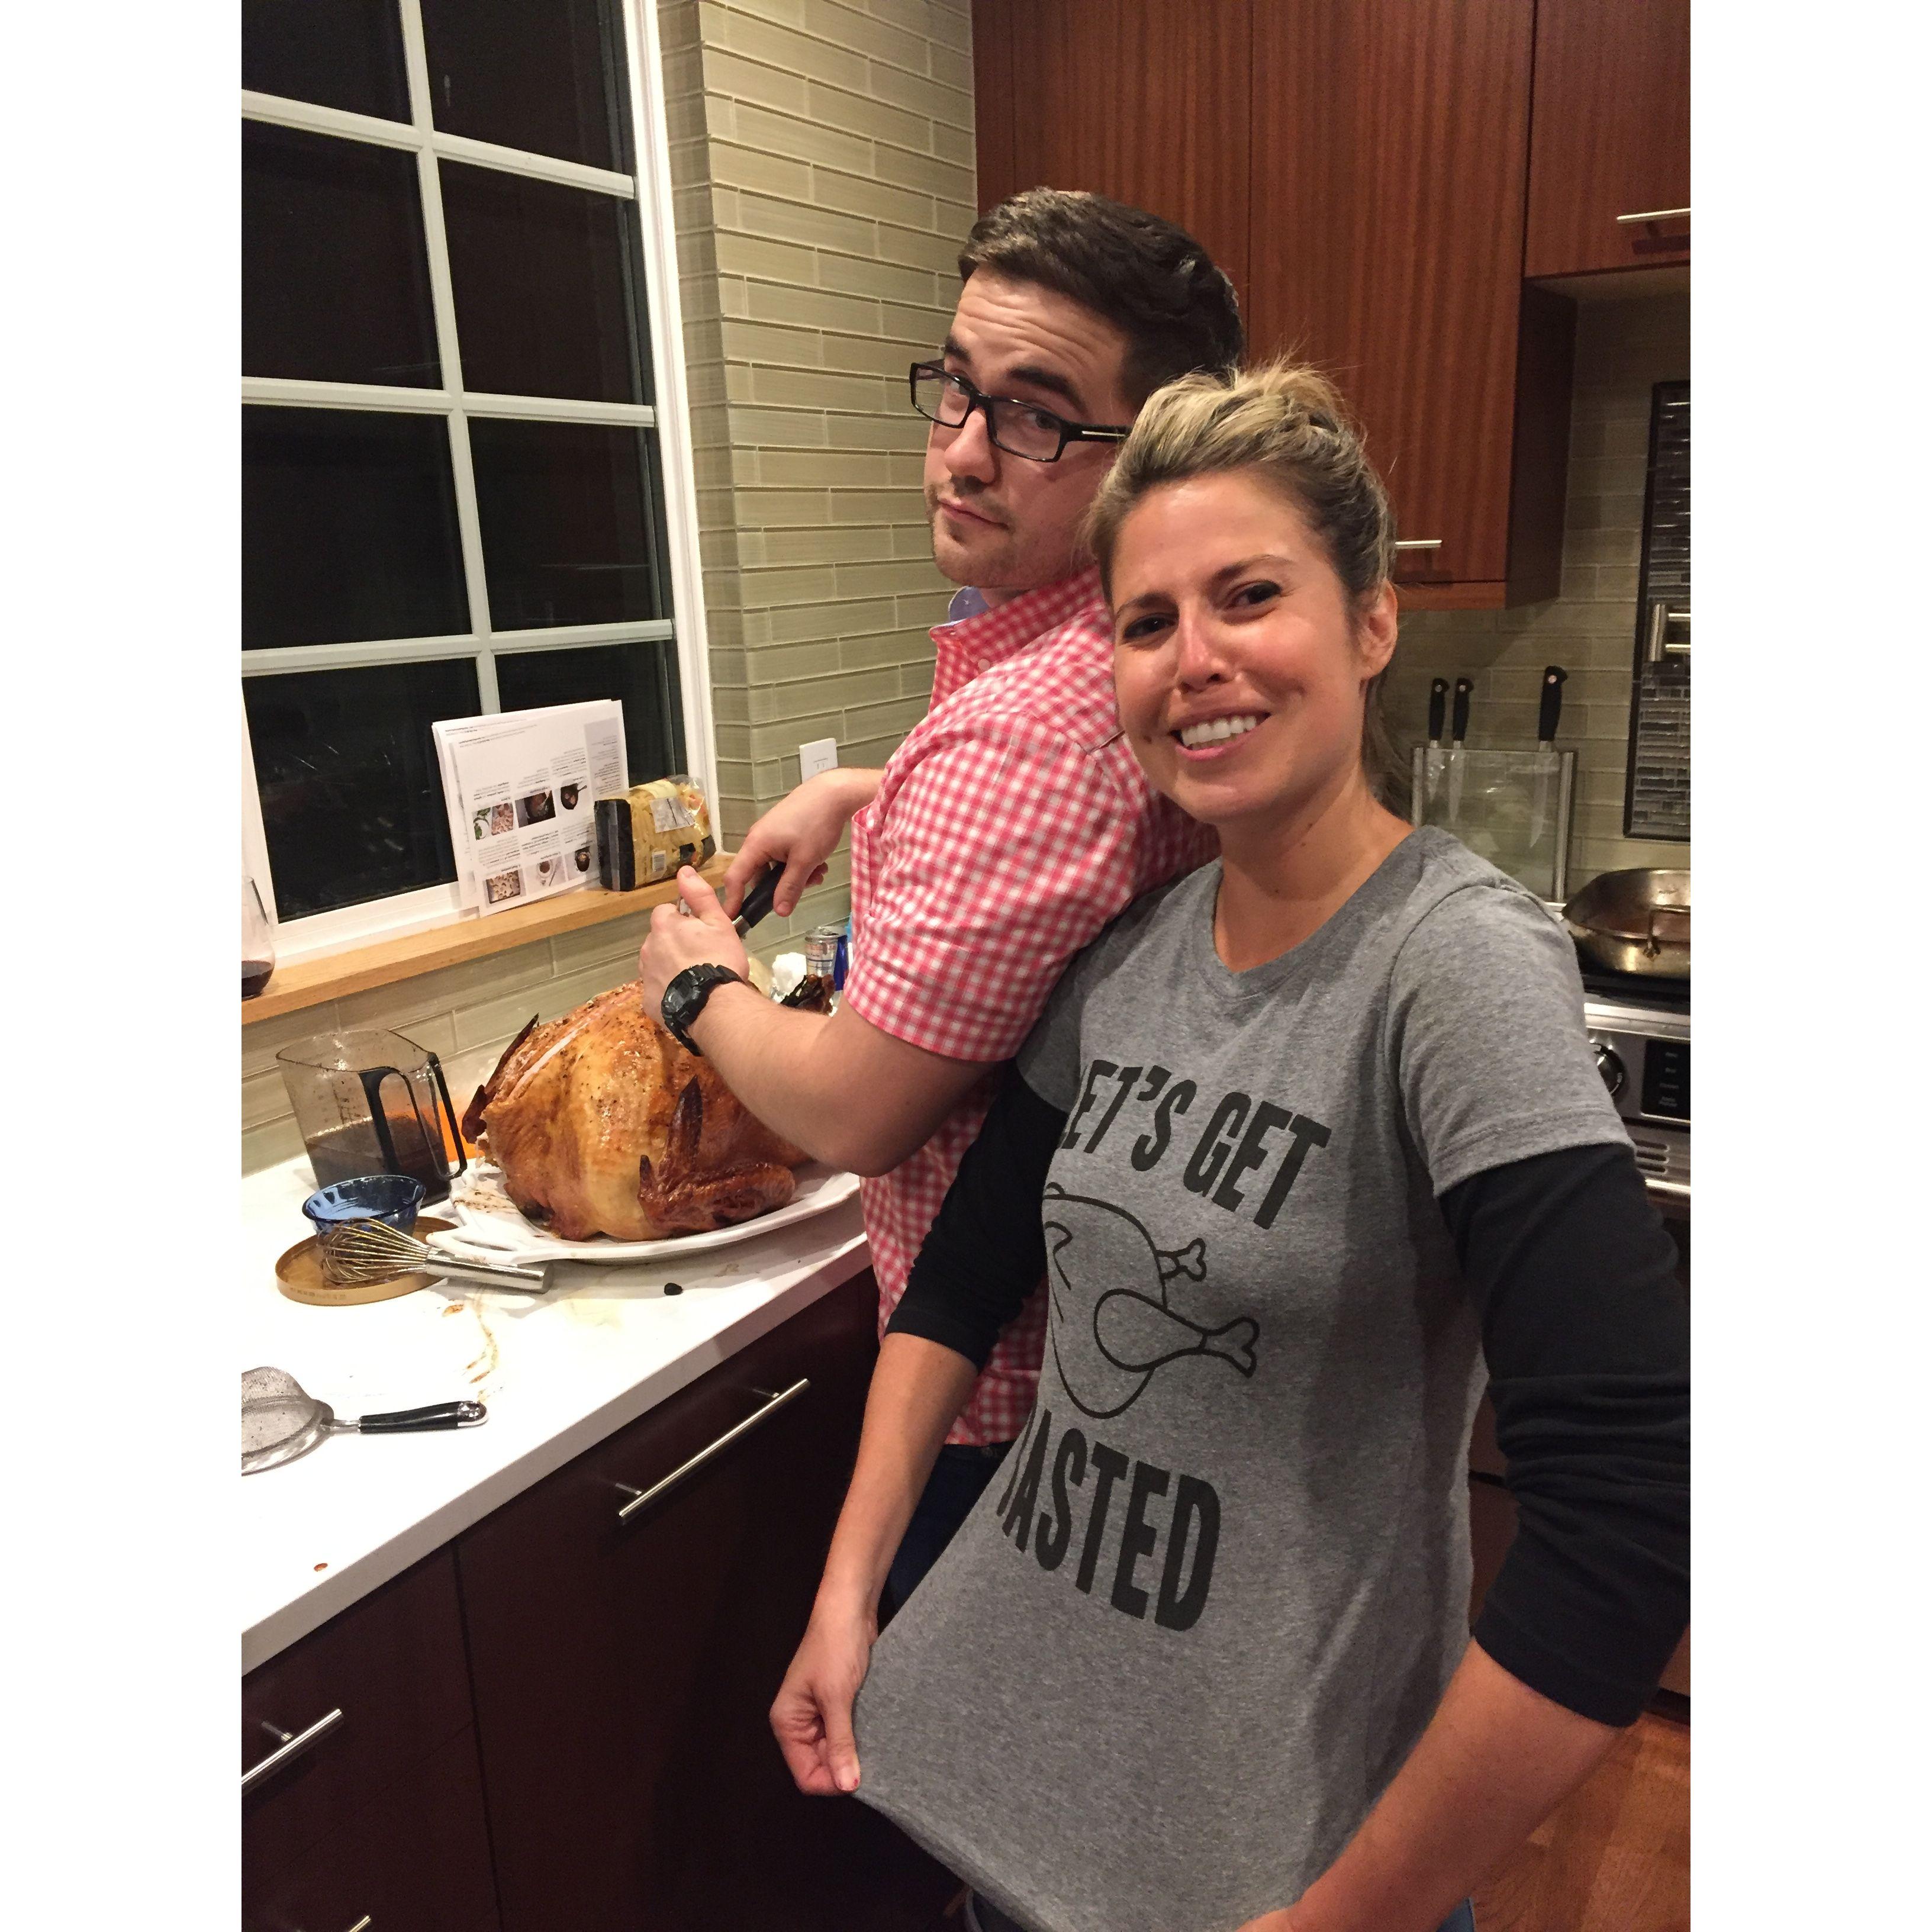 "Let's get basted" Kaleb & Tessa's sis, Britt: Thanksgiving, 2017